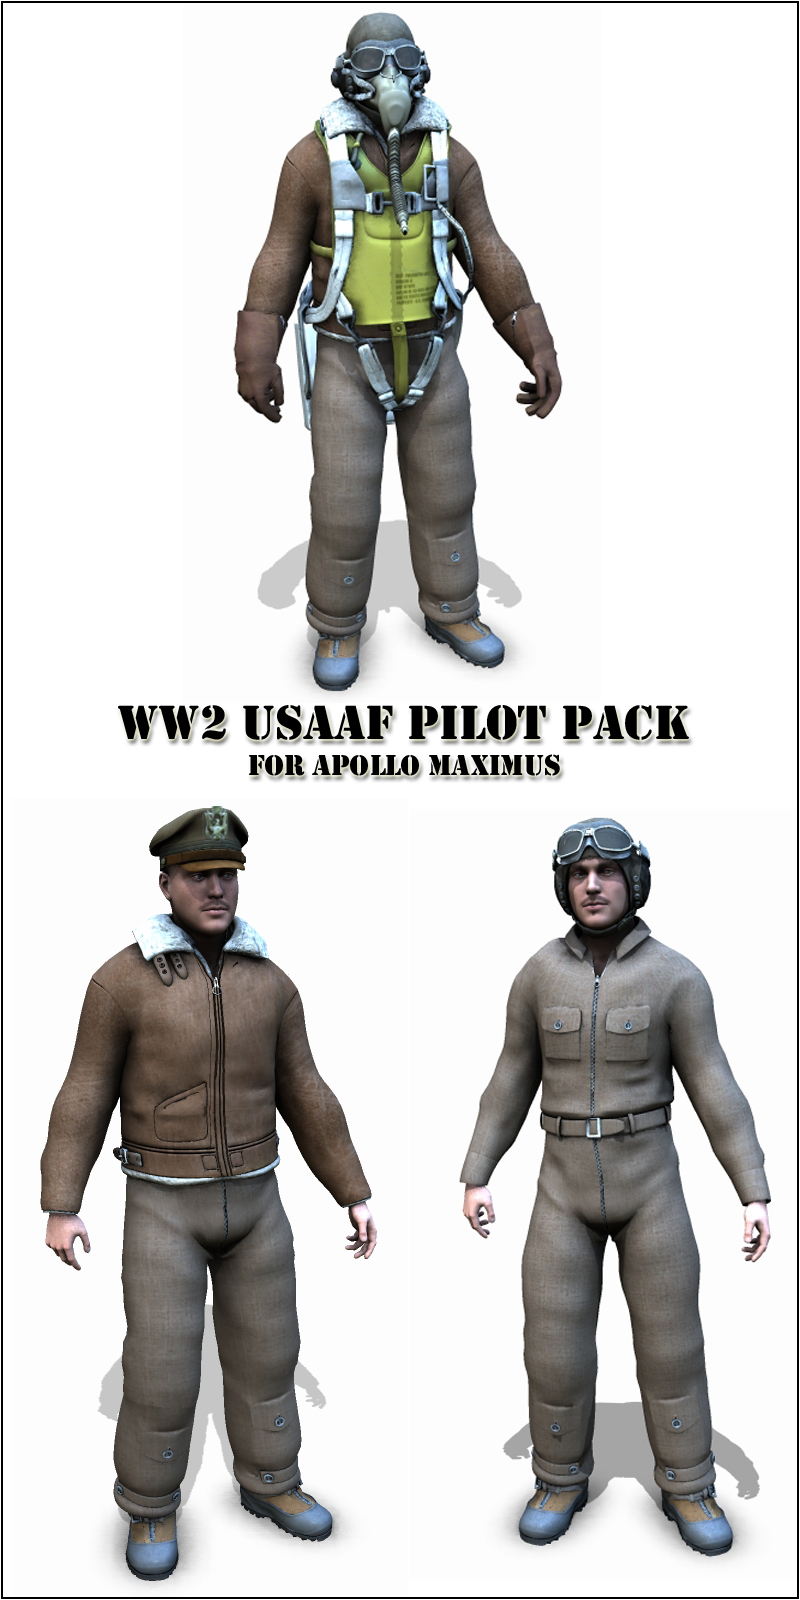 WW2 USAAF pilot pack